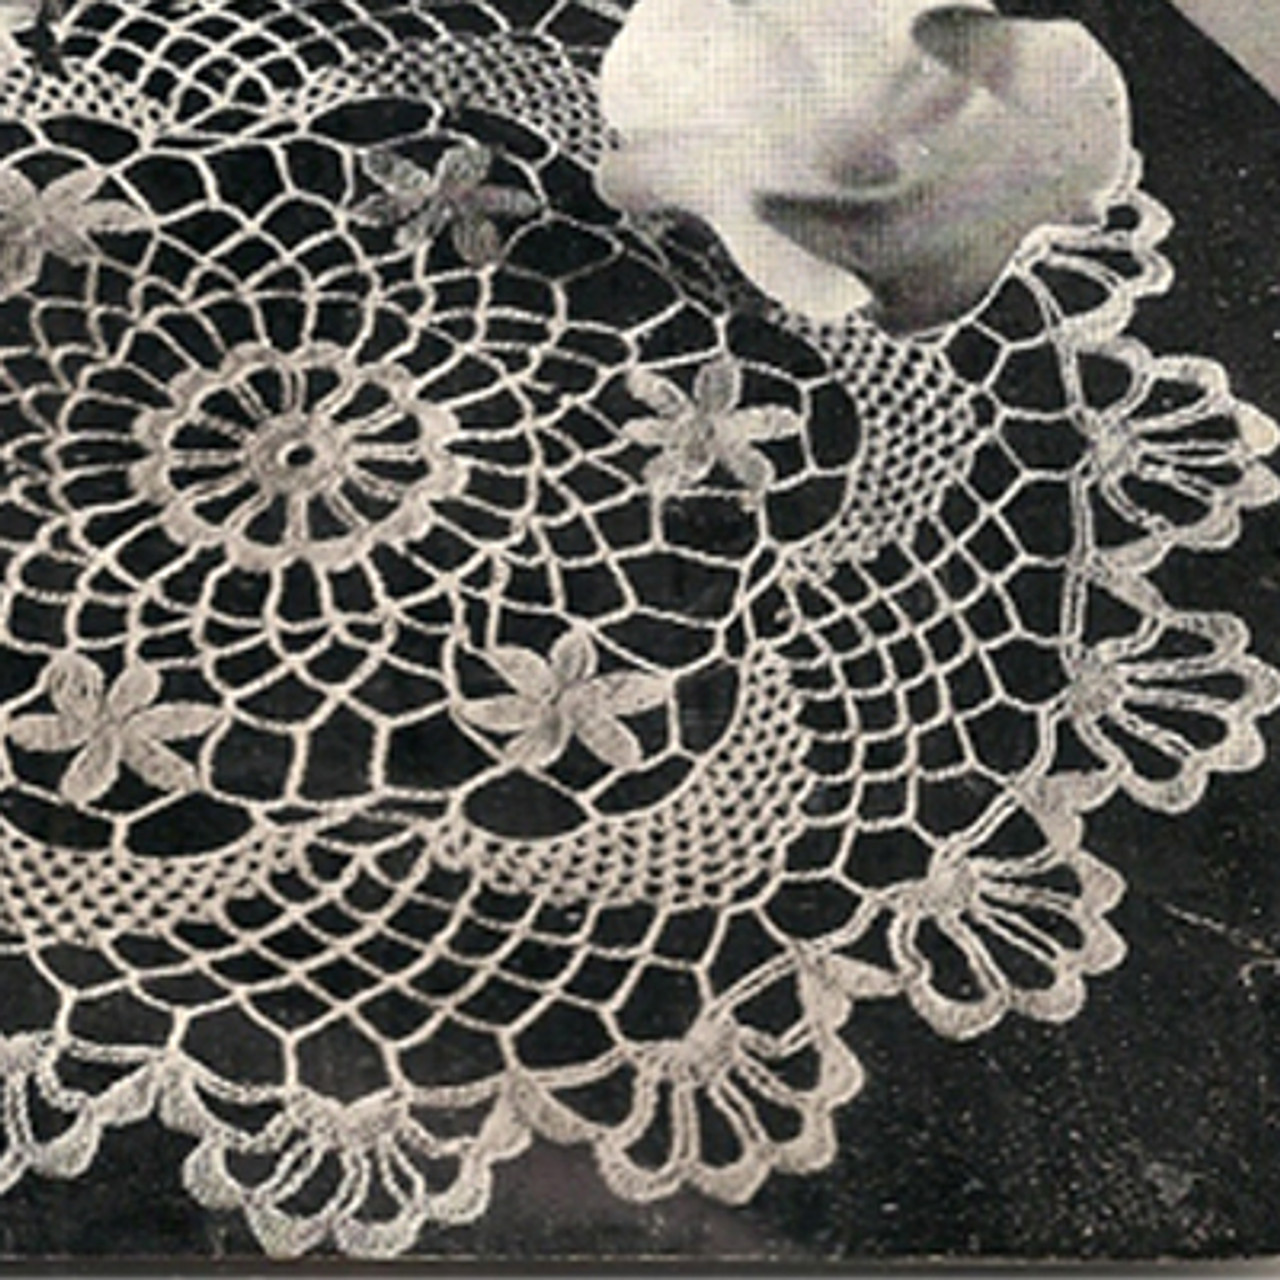 Scalloped Shell Doily Crochet Pattern 